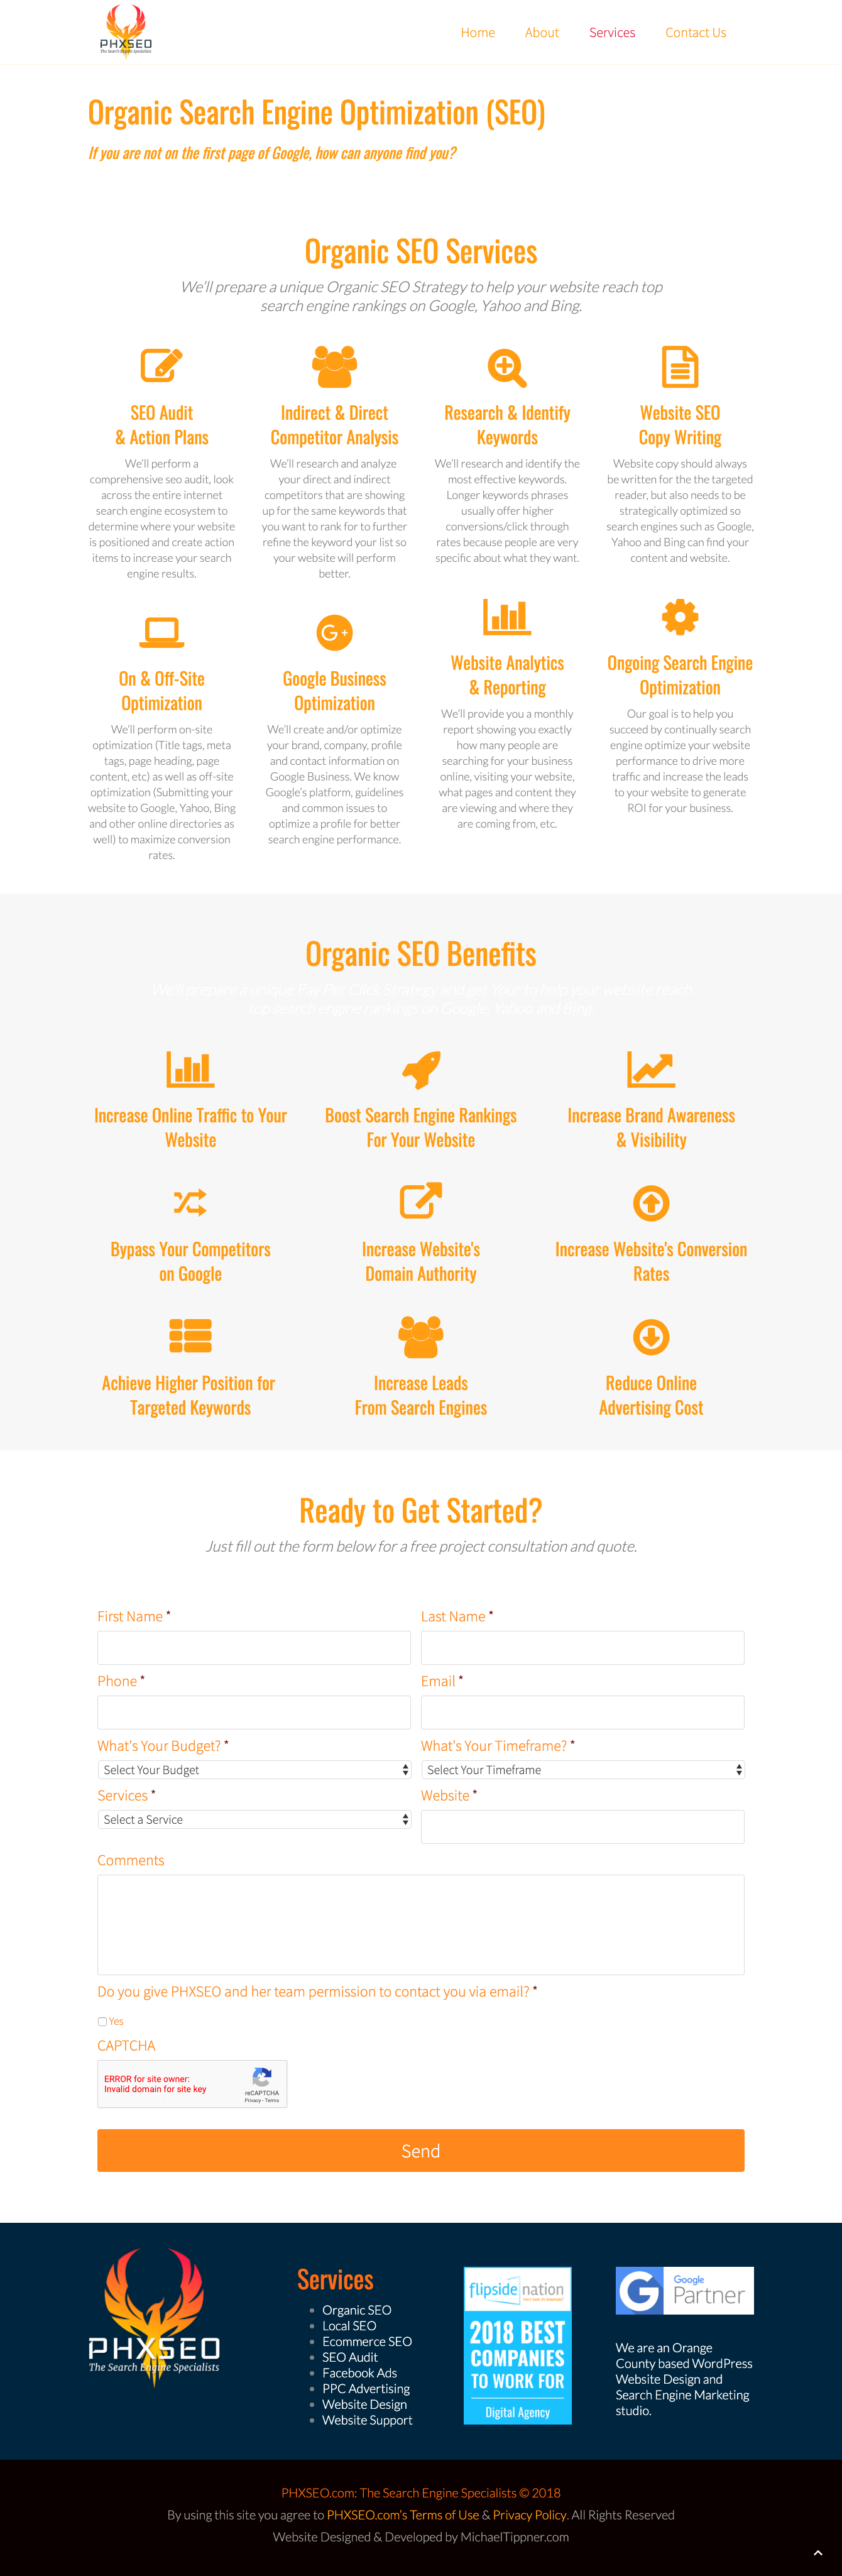 Phonenix-Search-Engine-Optimization-SEO-Website-Design-SEO